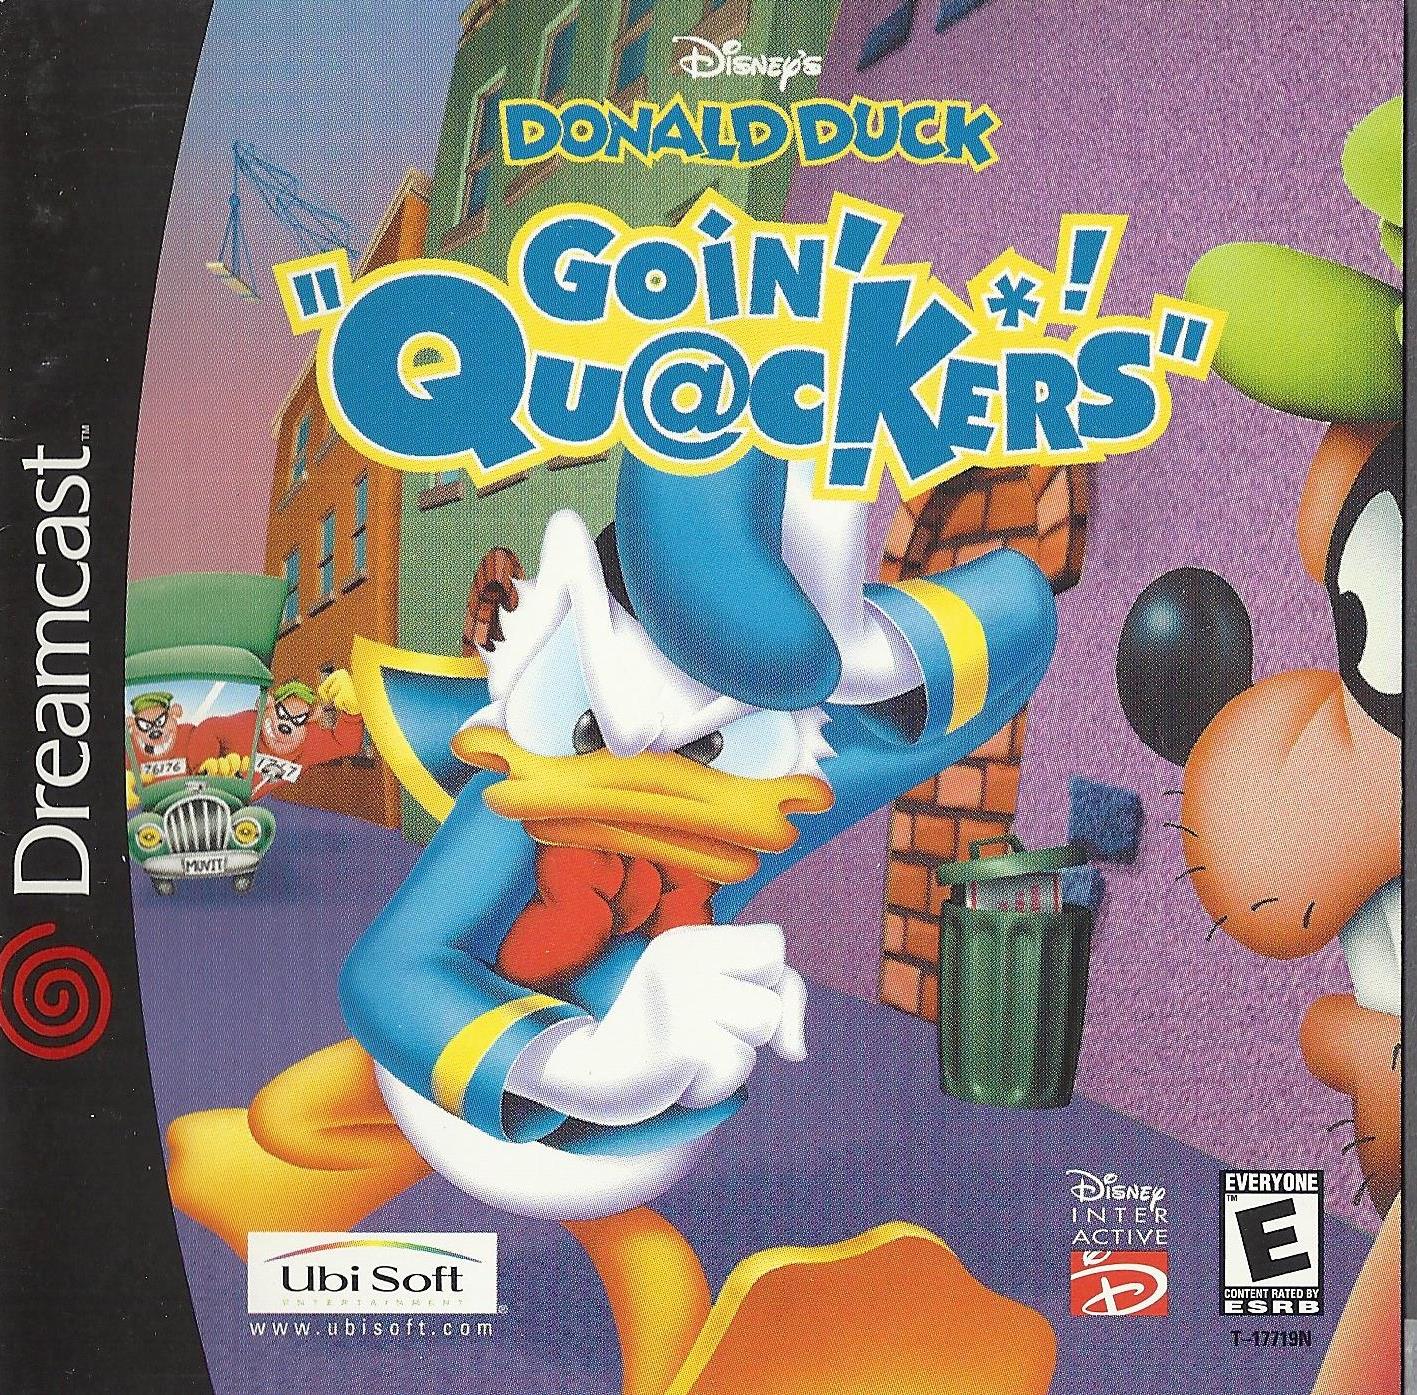 Duck goin. Игра про Дональда Дака на ps1. Donald Duck ps1 обложка. Donald Duck обложка Sega Dreamcast.